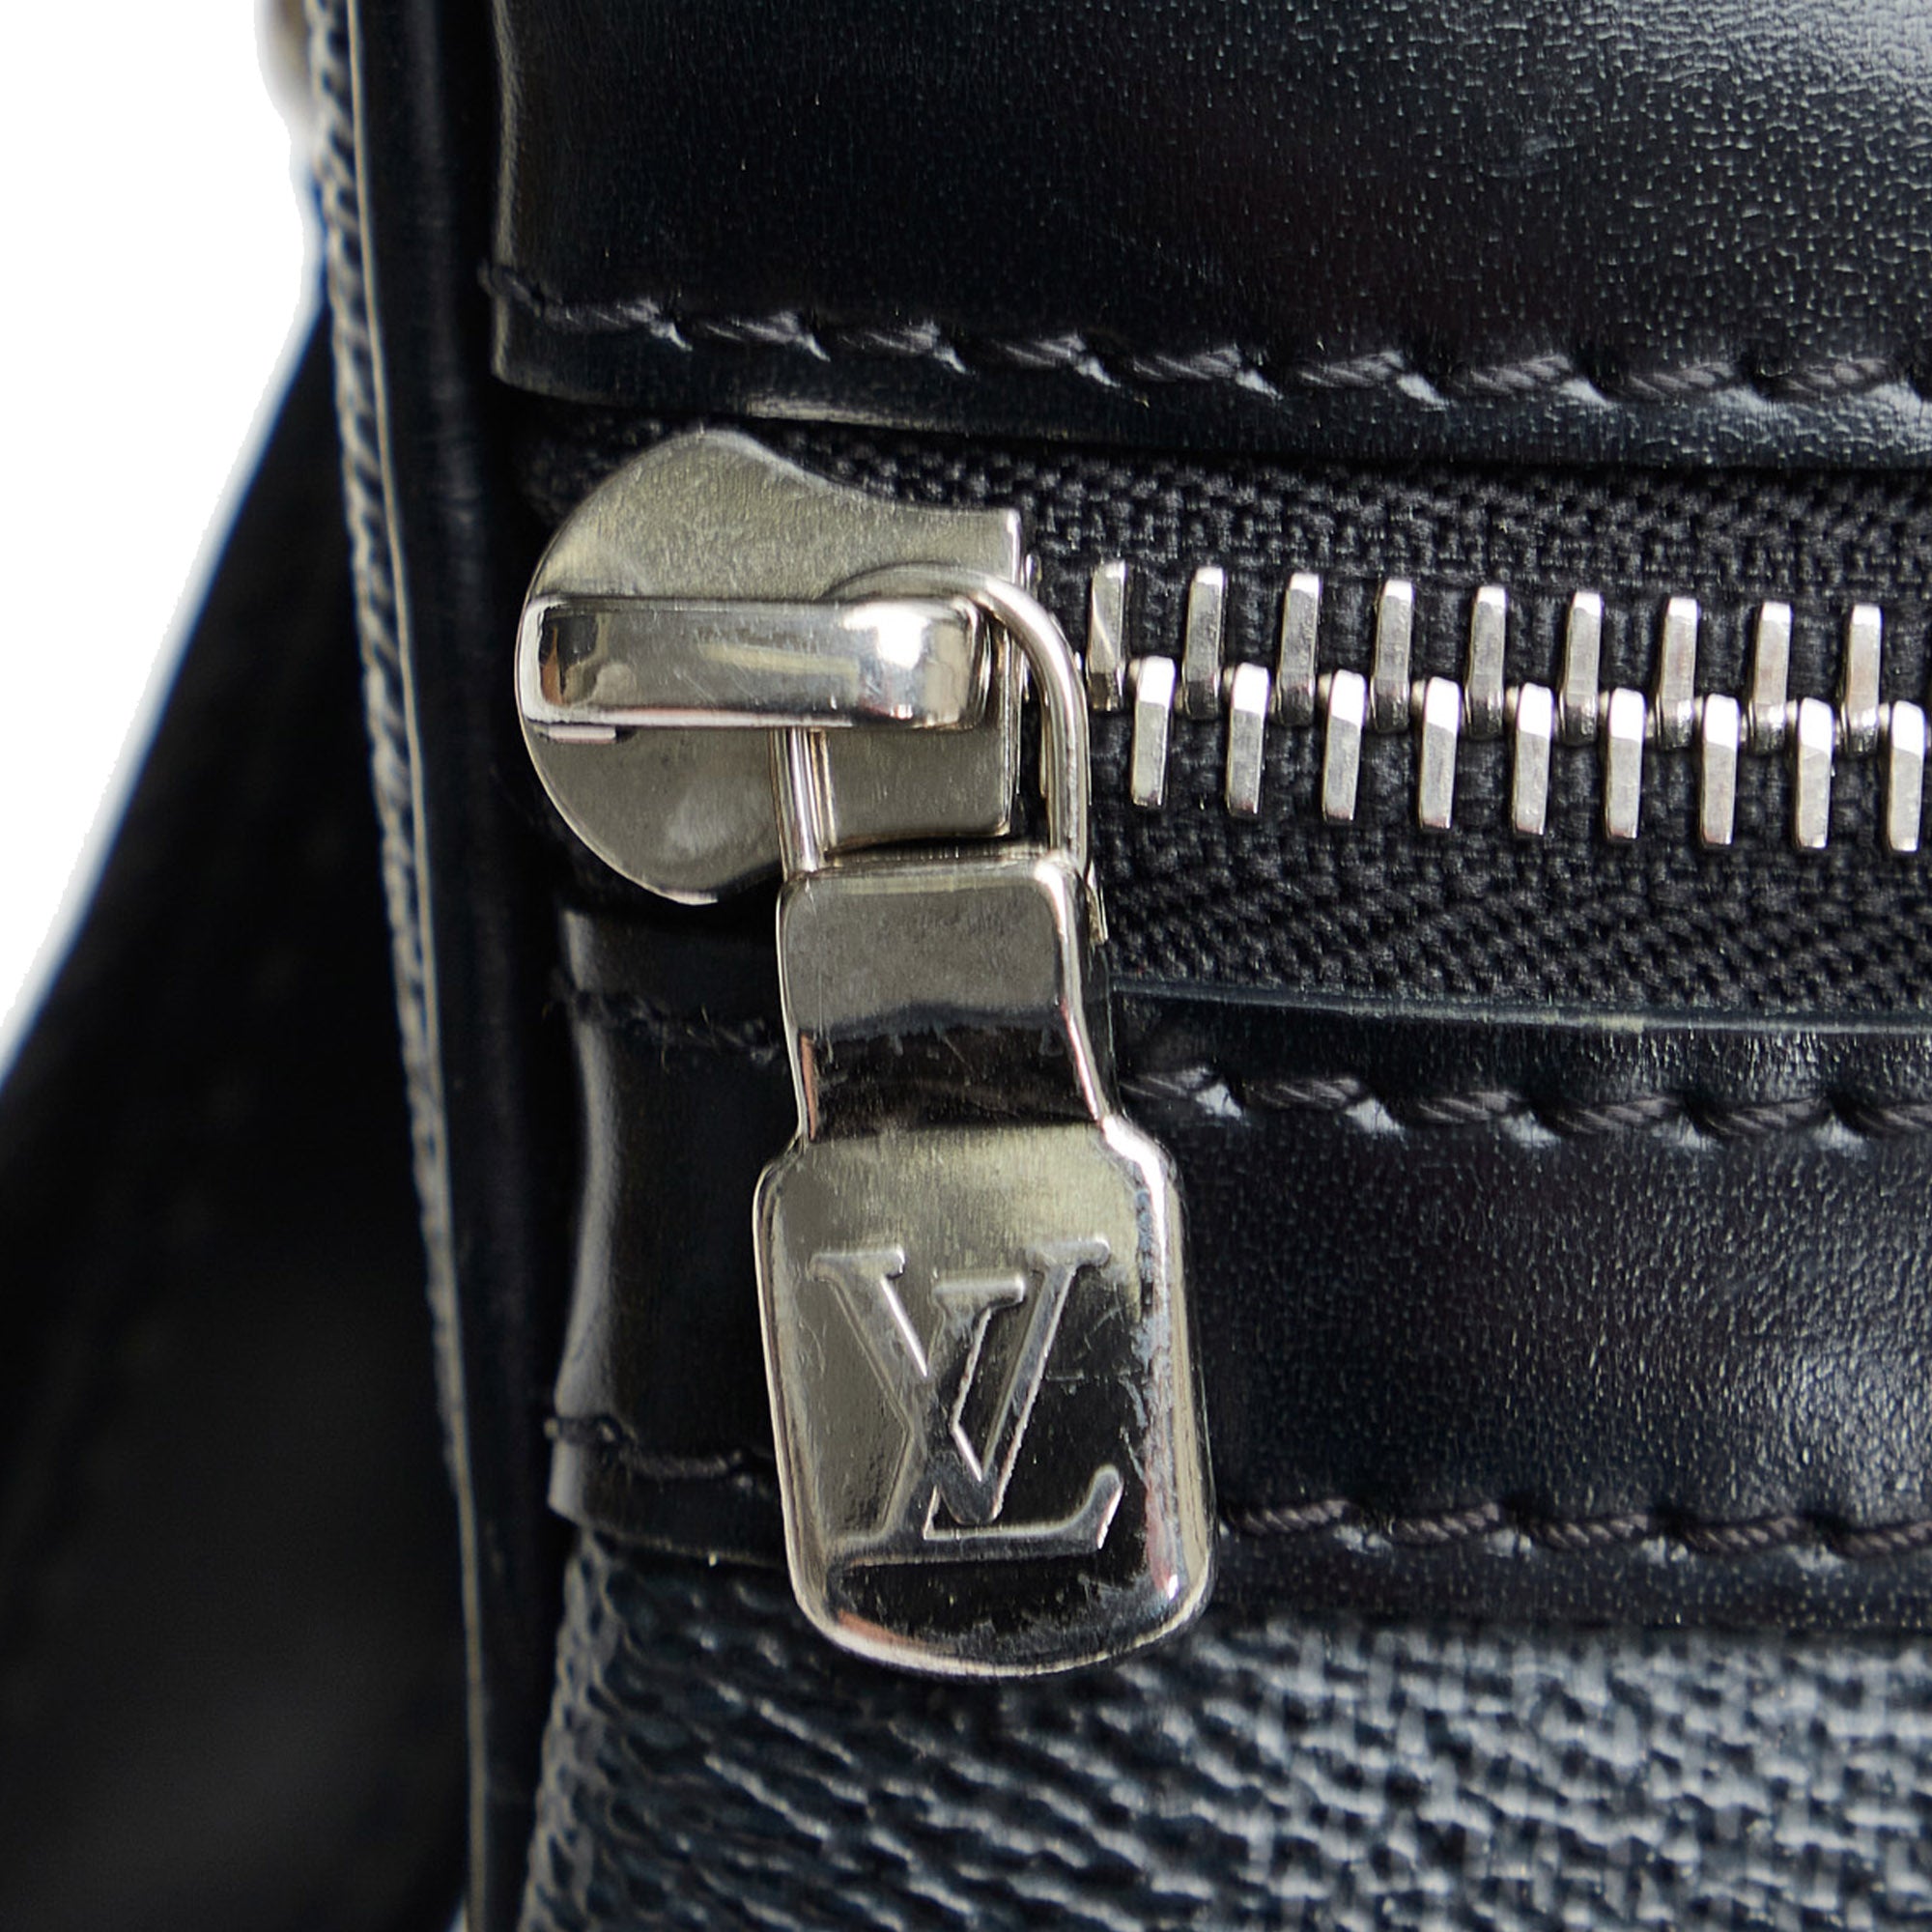 Louis Vuitton checkered ''Thomas'' bag